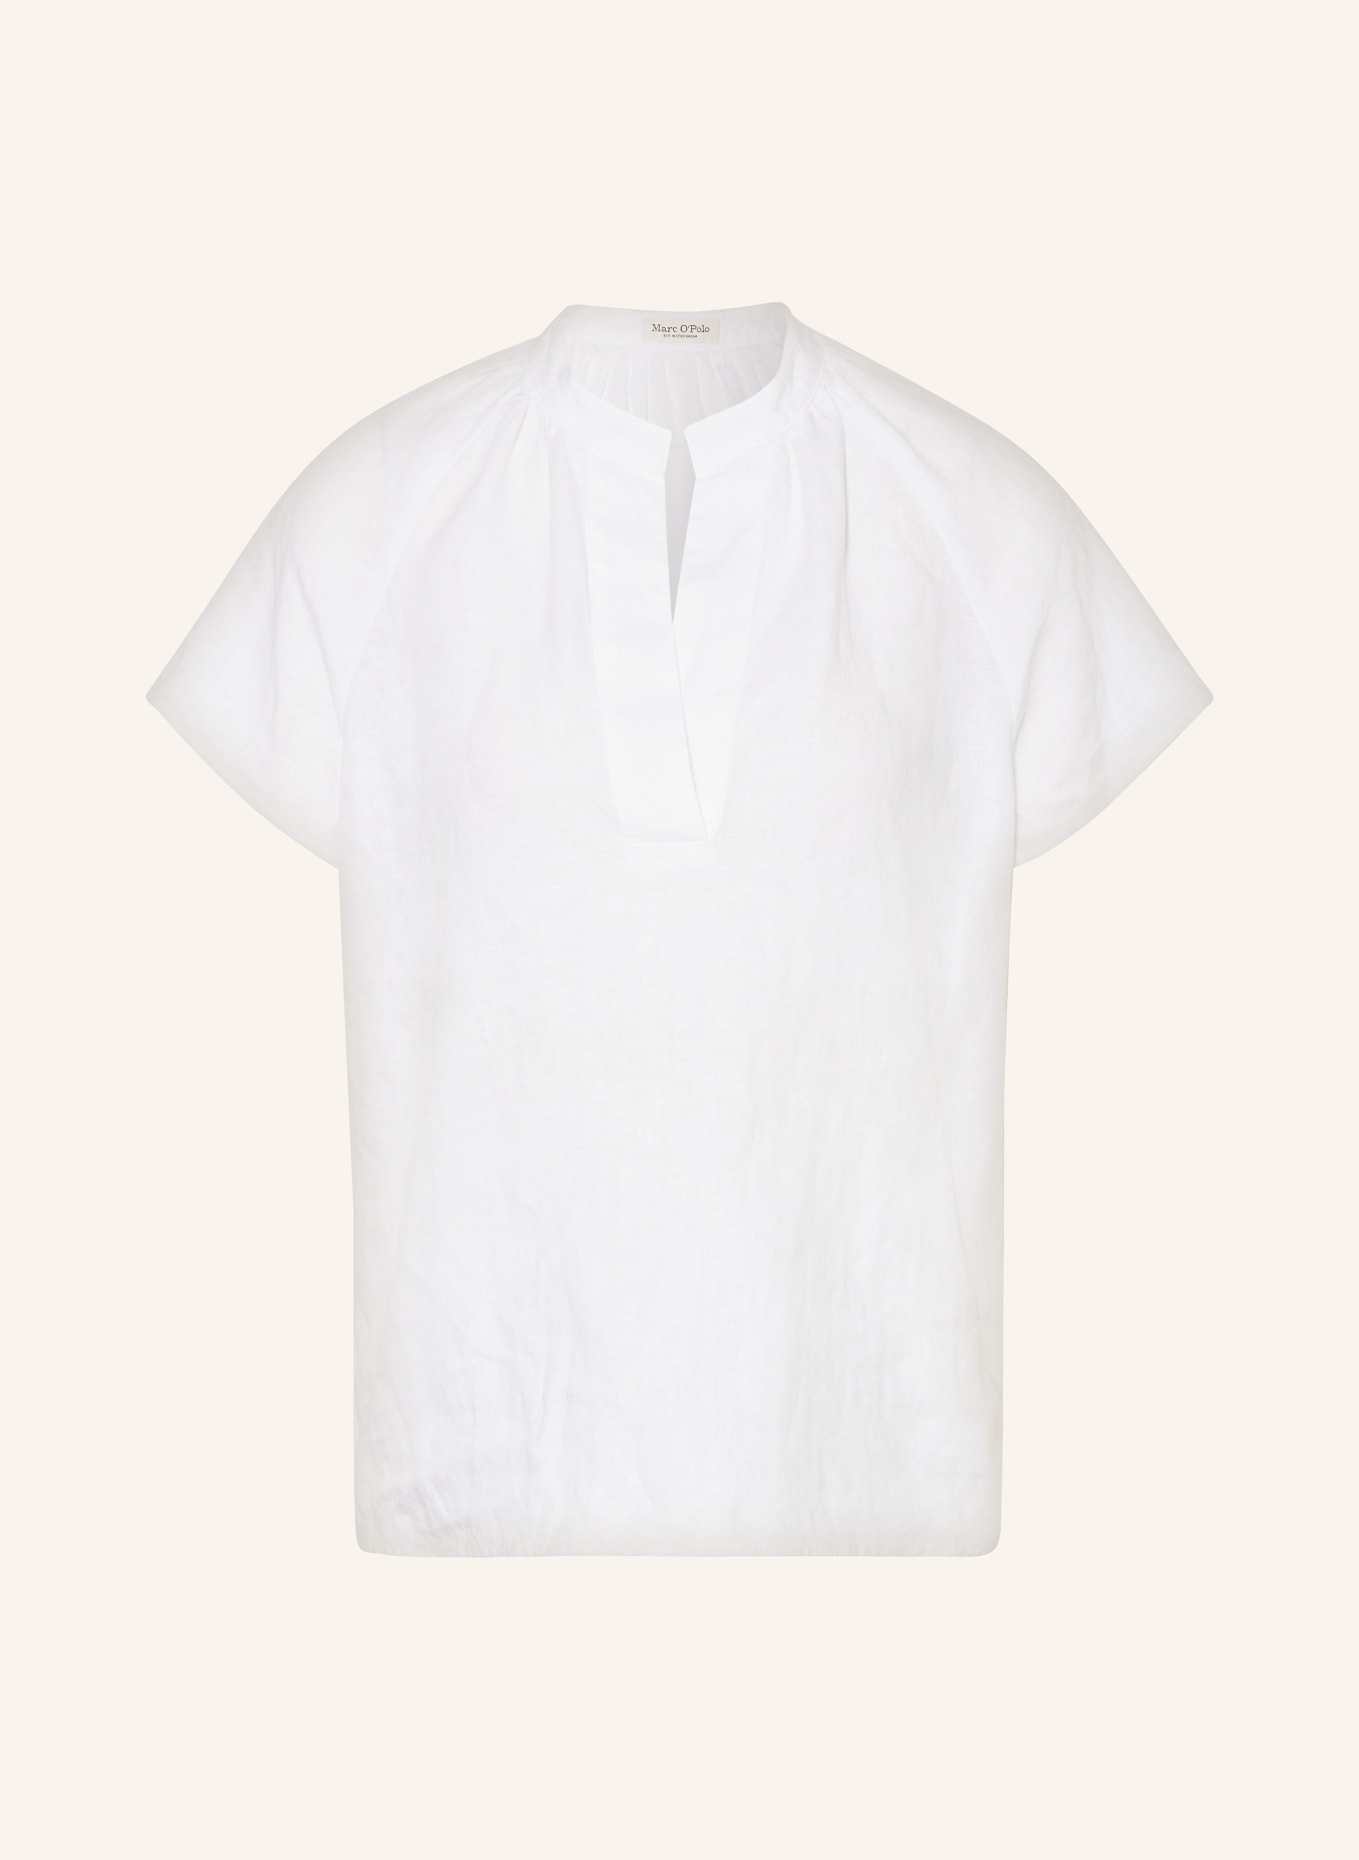 Marc O'Polo Shirt blouse made of linen, Color: WHITE (Image 1)